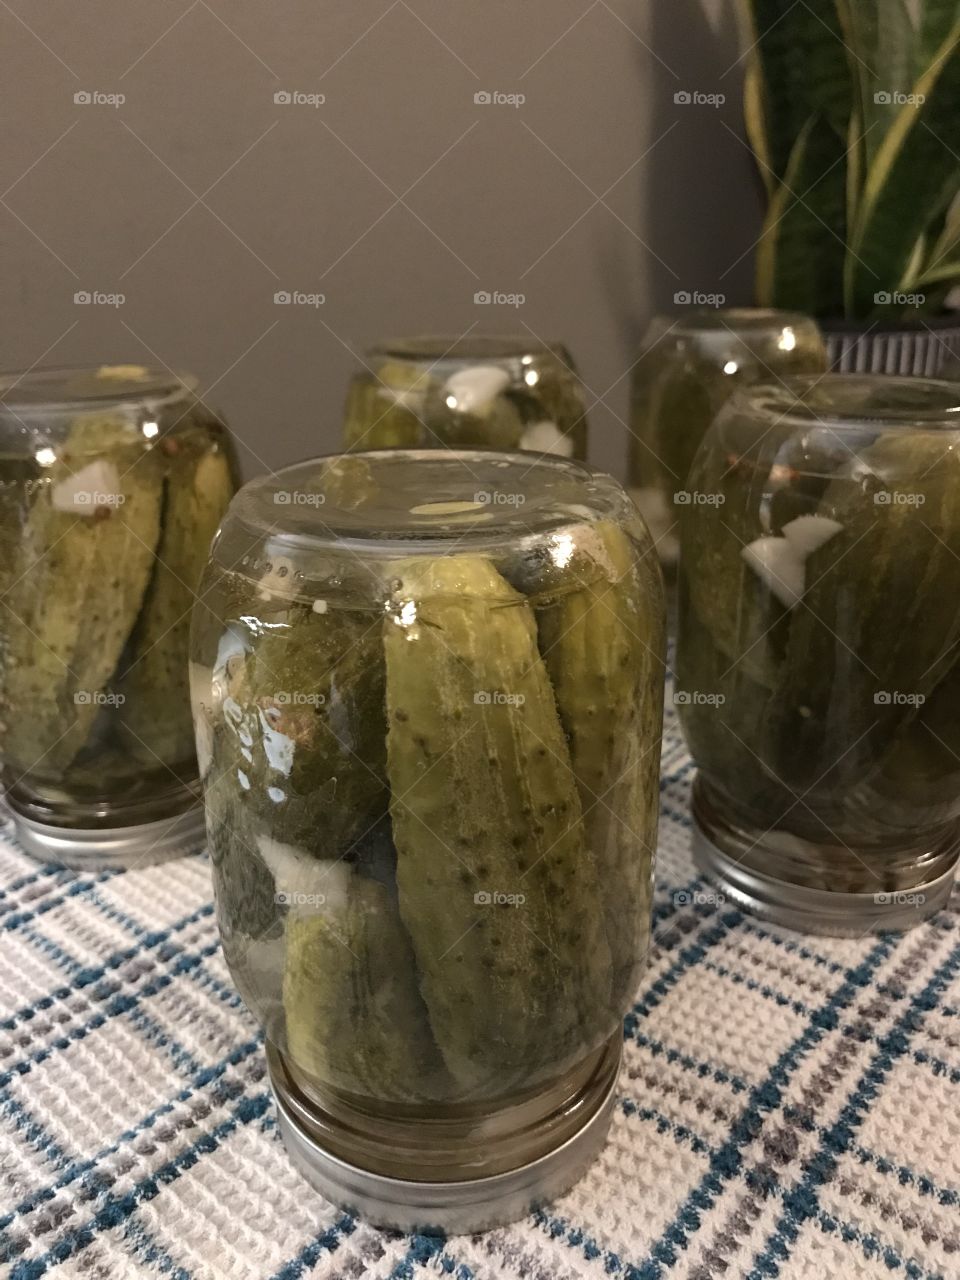 Pickling jars